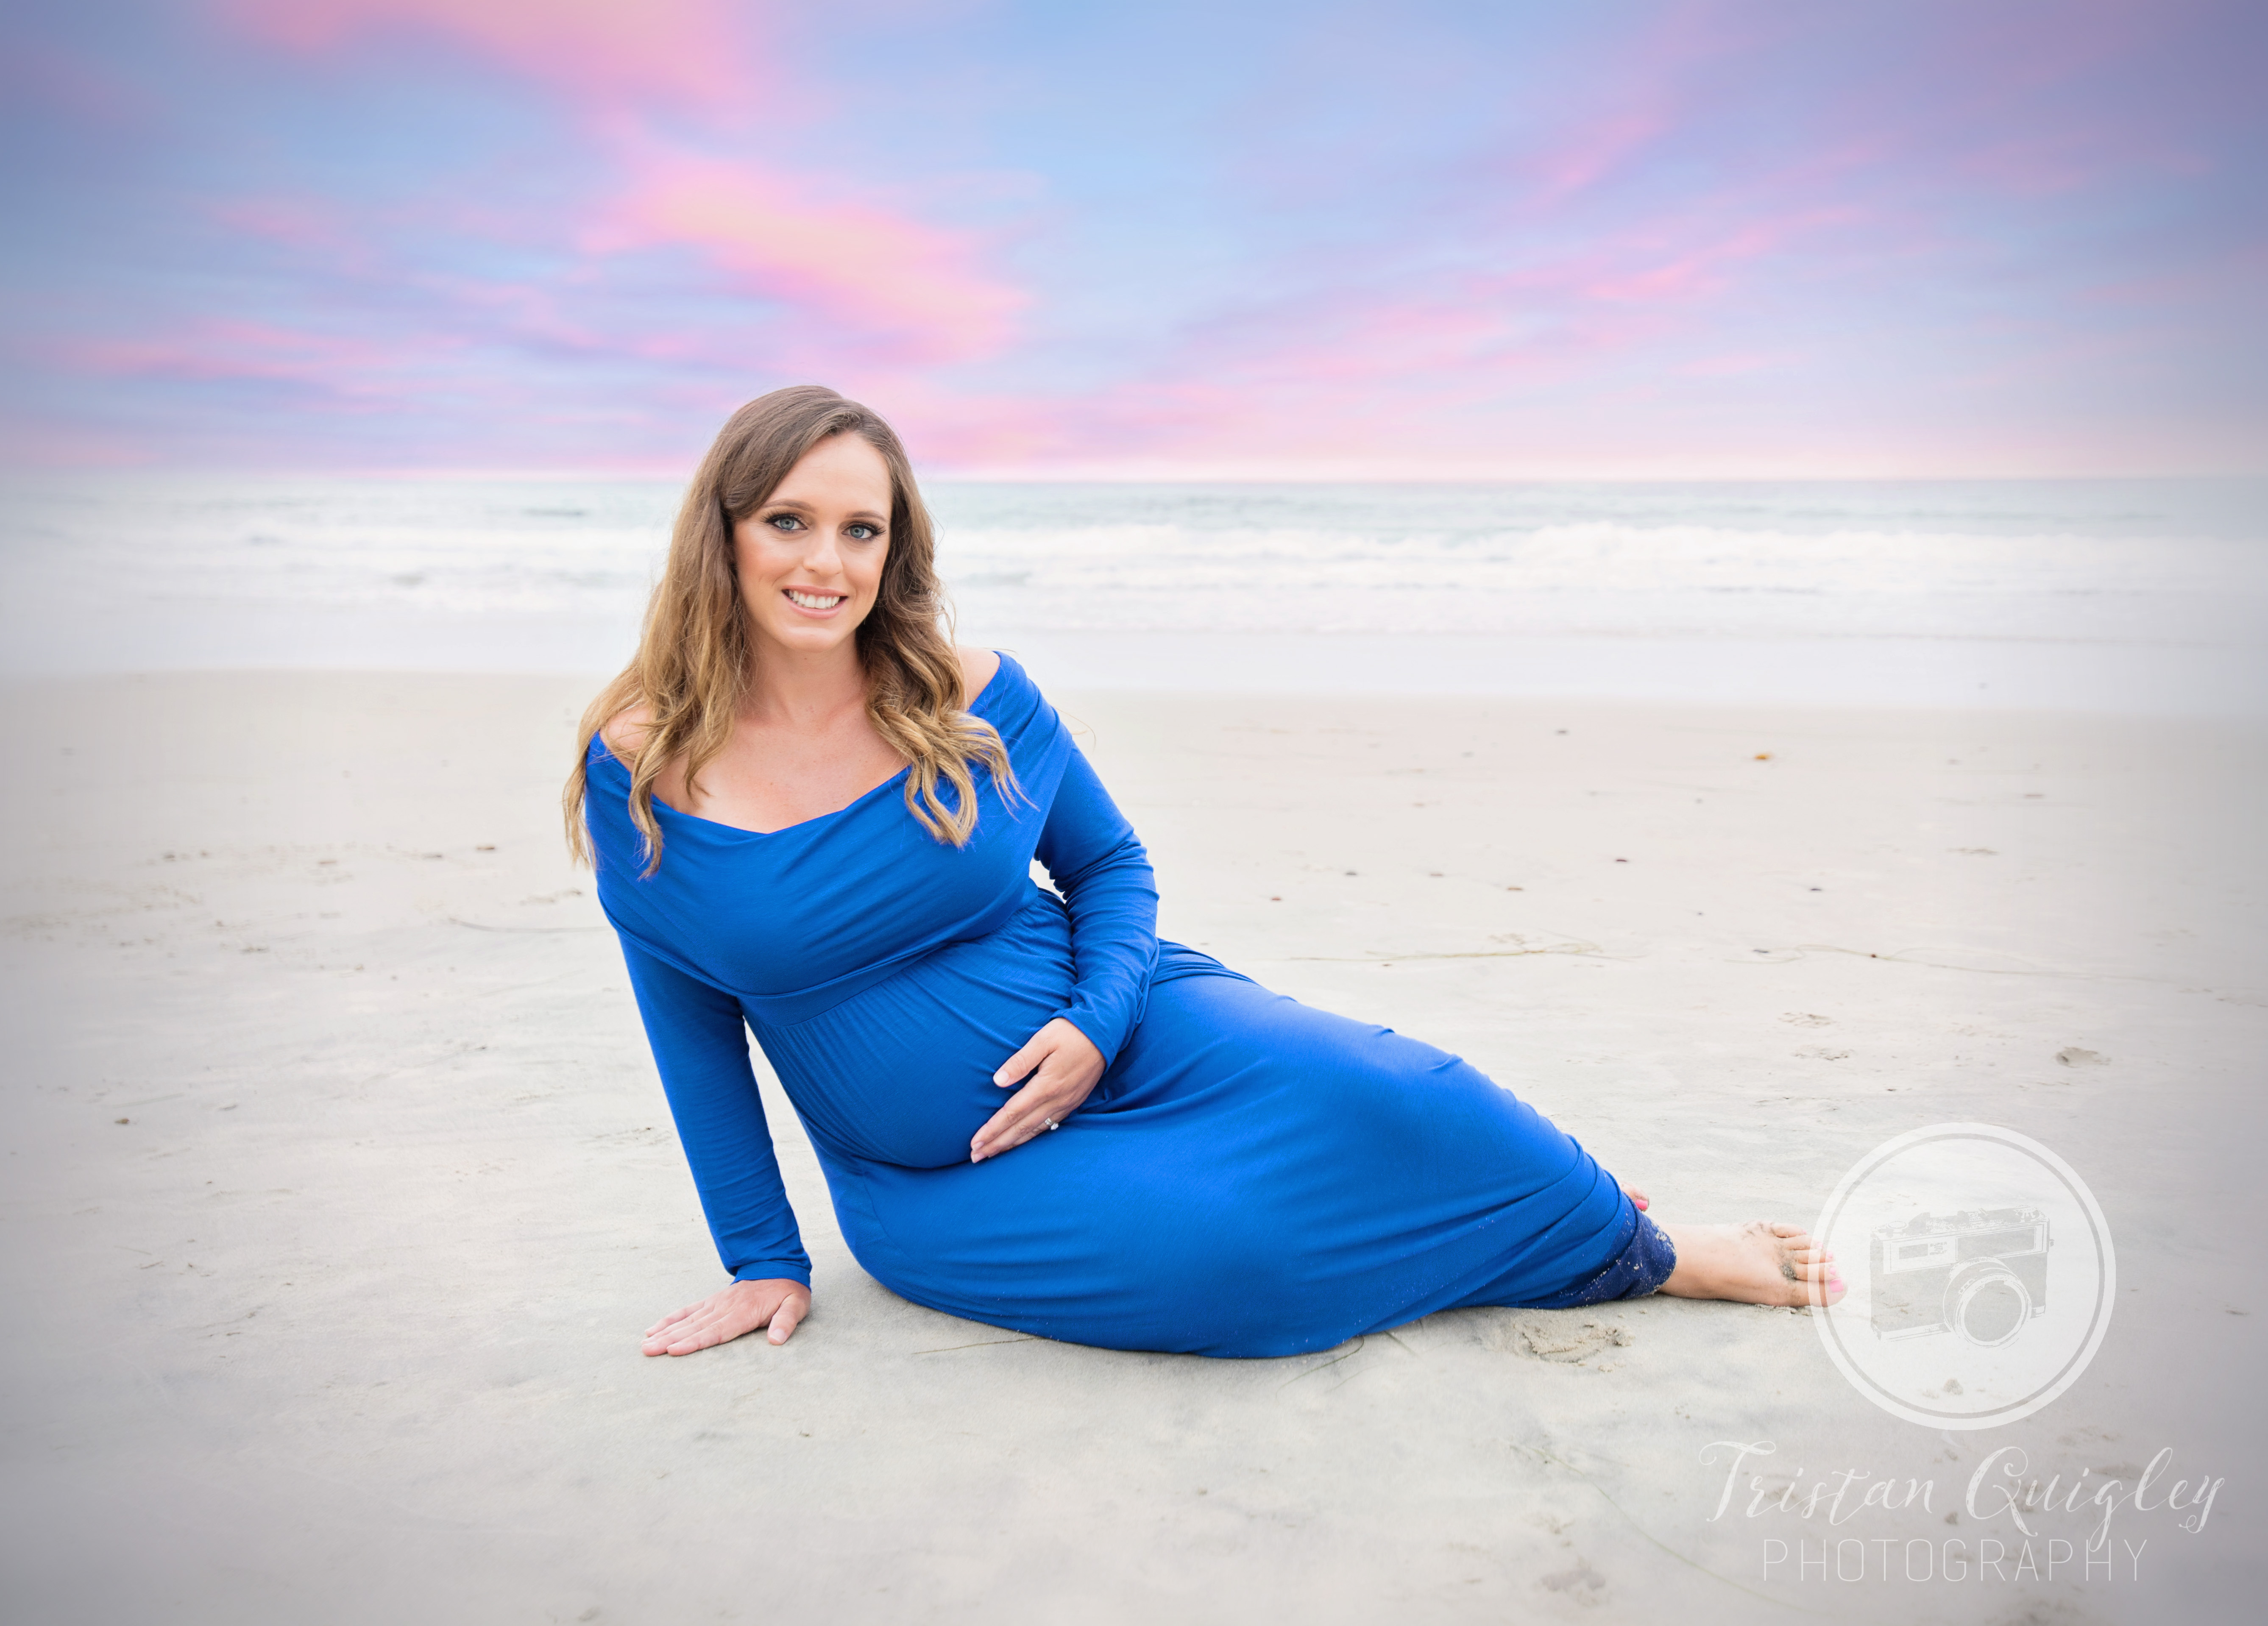 San Diego Maternity Photography - San Diego, CA- Tristan Quigley Photography